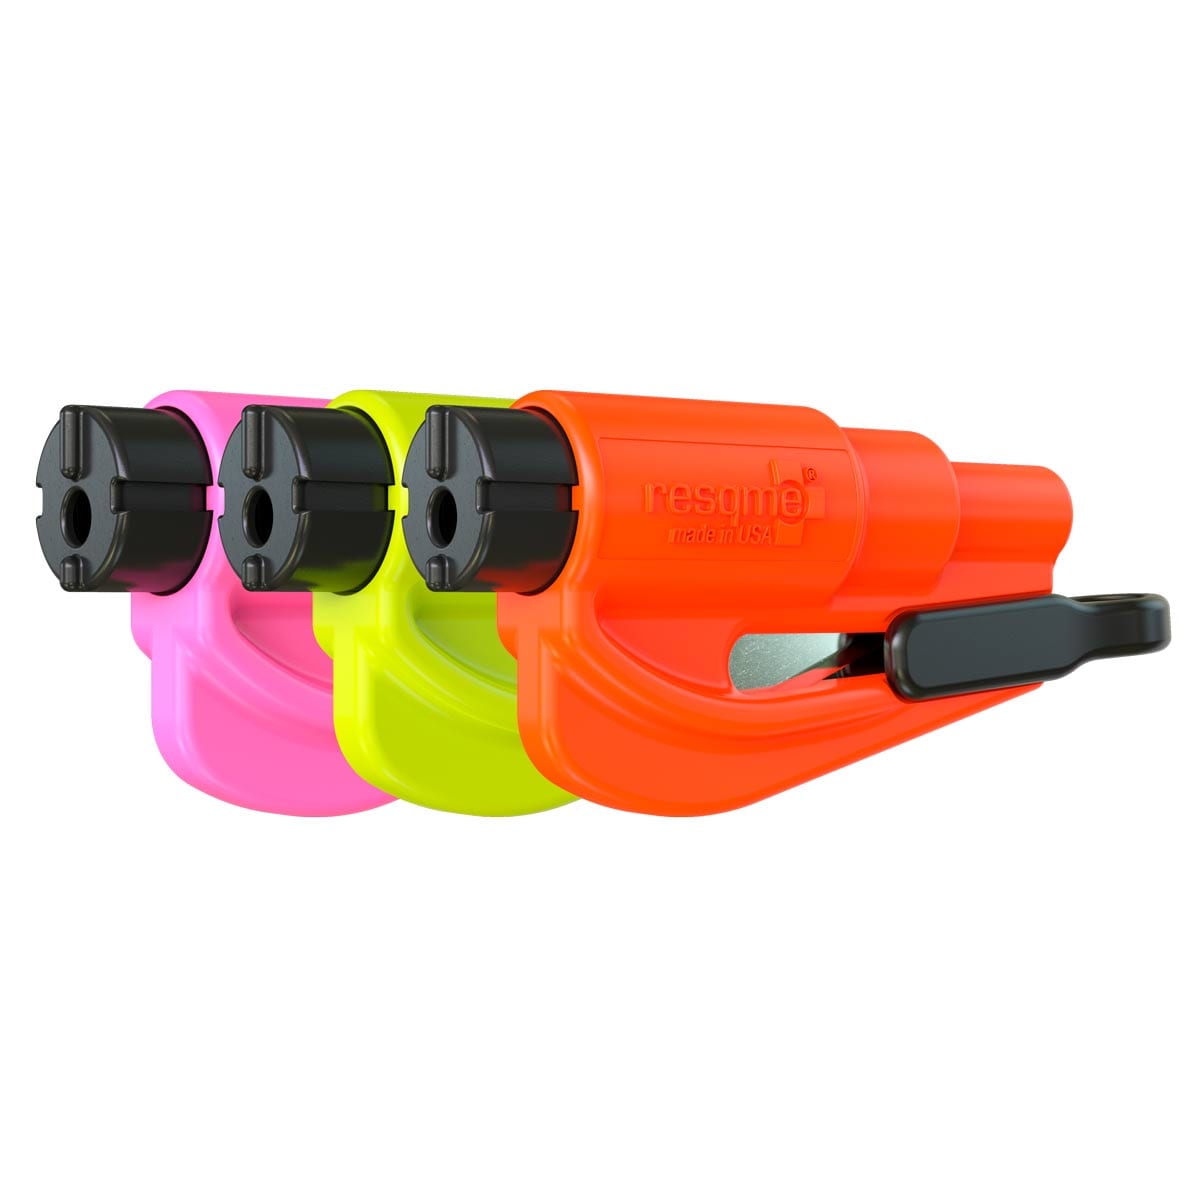 resqme® Car Escape Tool, Seatbelt Cutter / Window Breaker - Pack of 3 Yellow, Pink & Orange